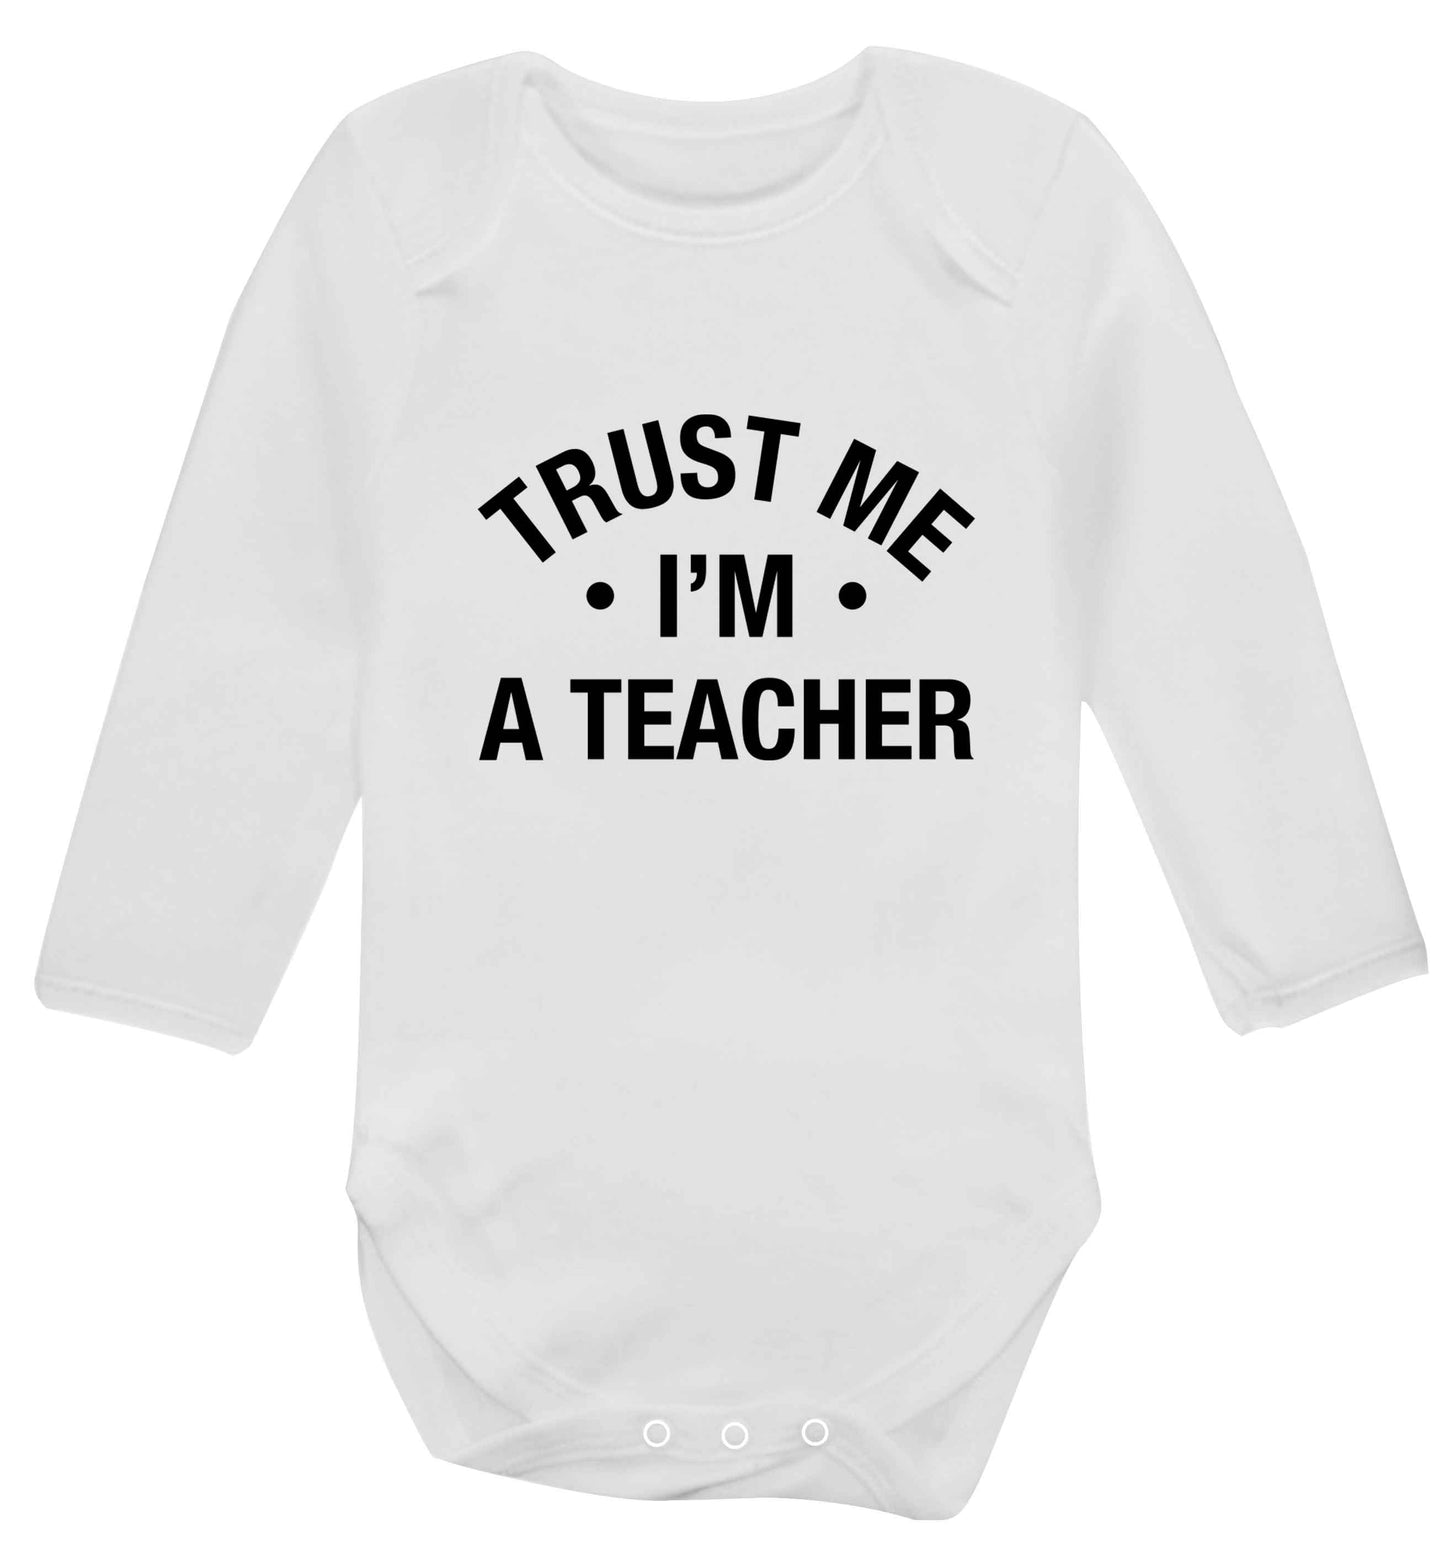 Trust me I'm a teacher baby vest long sleeved white 6-12 months